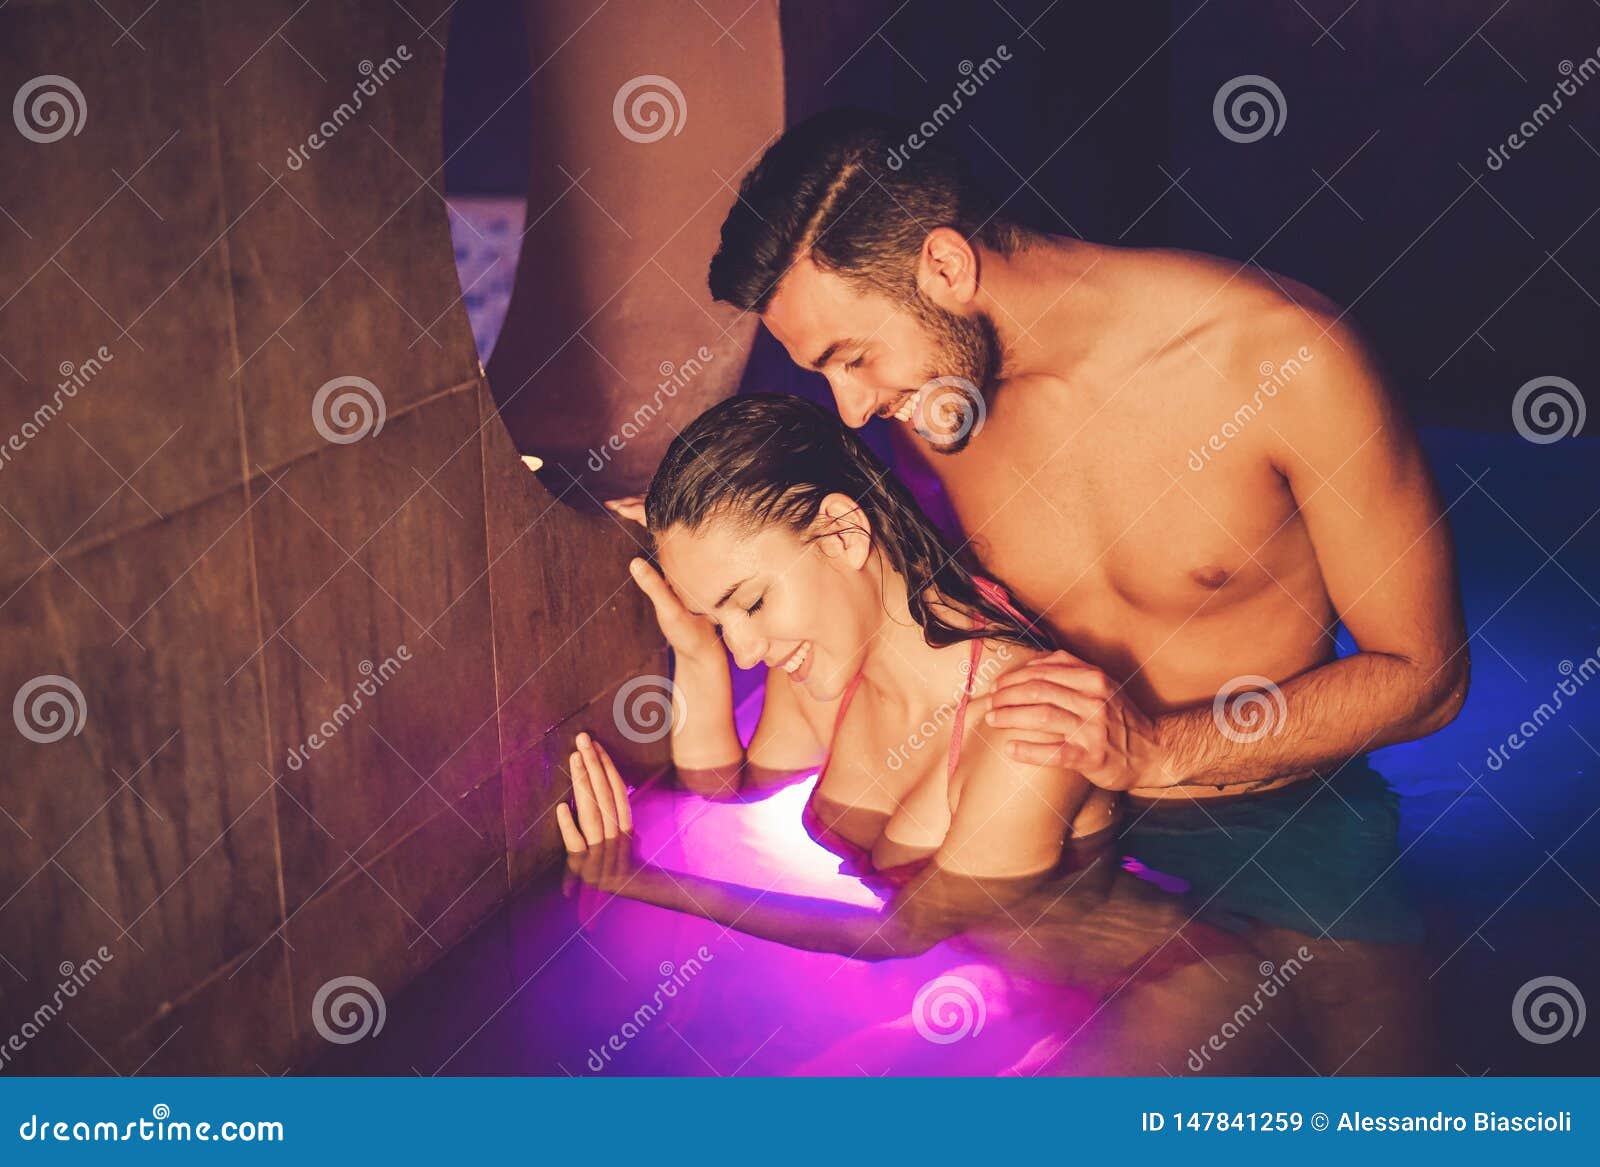 Sexy Romantic Couple Massage Stock Photos